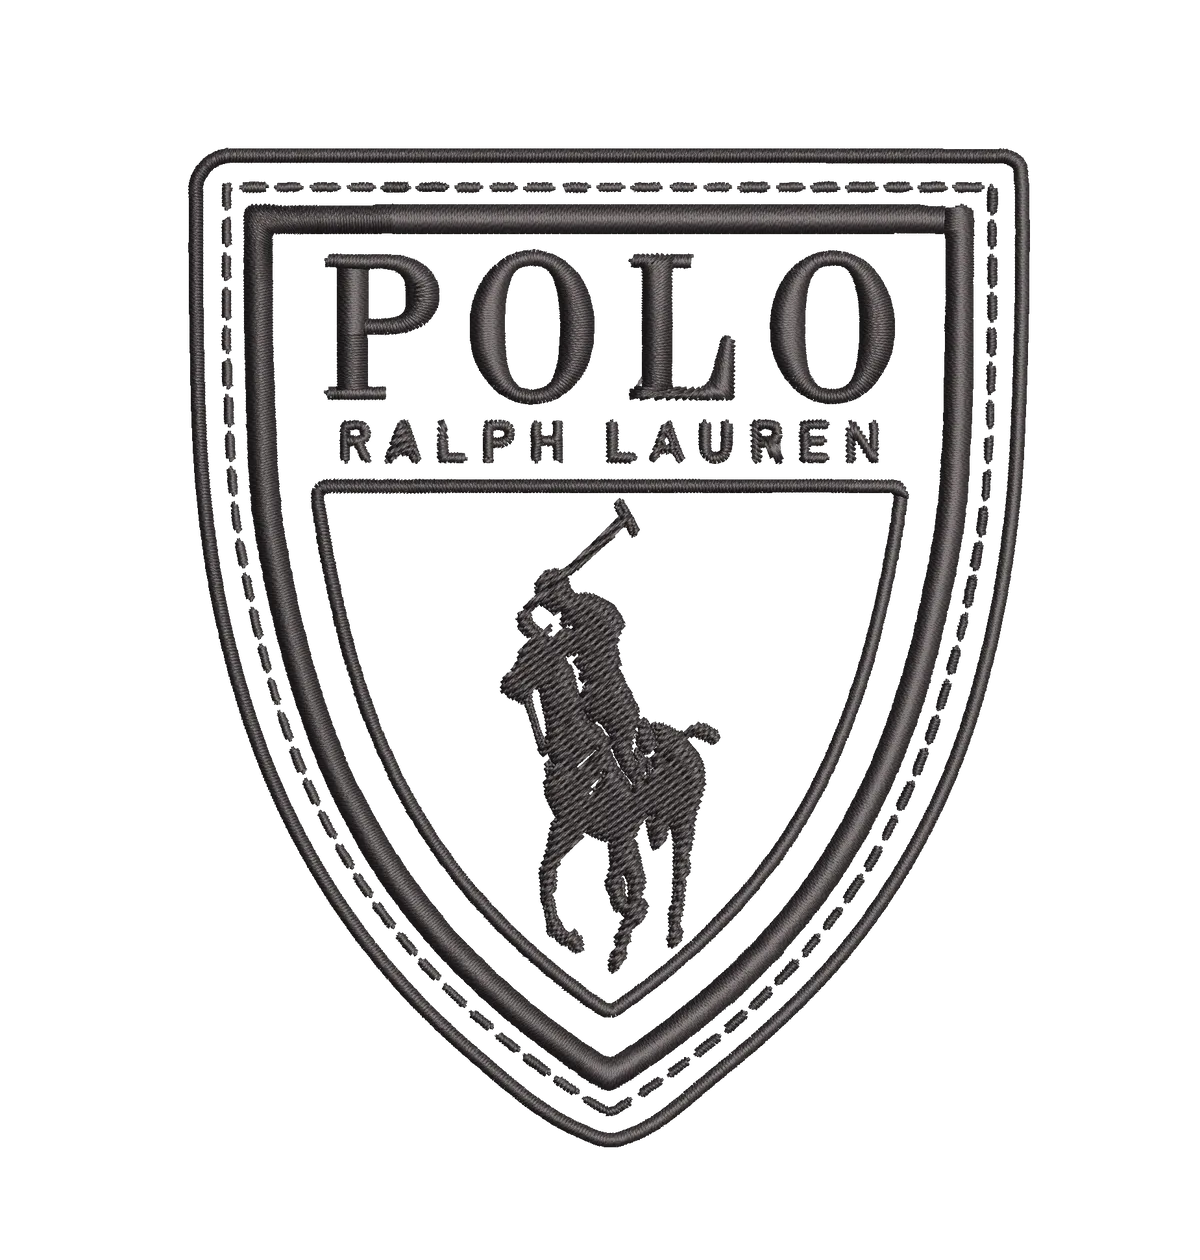 Ralph Lauren 2 Embroidery Design - FineryEmbroidery